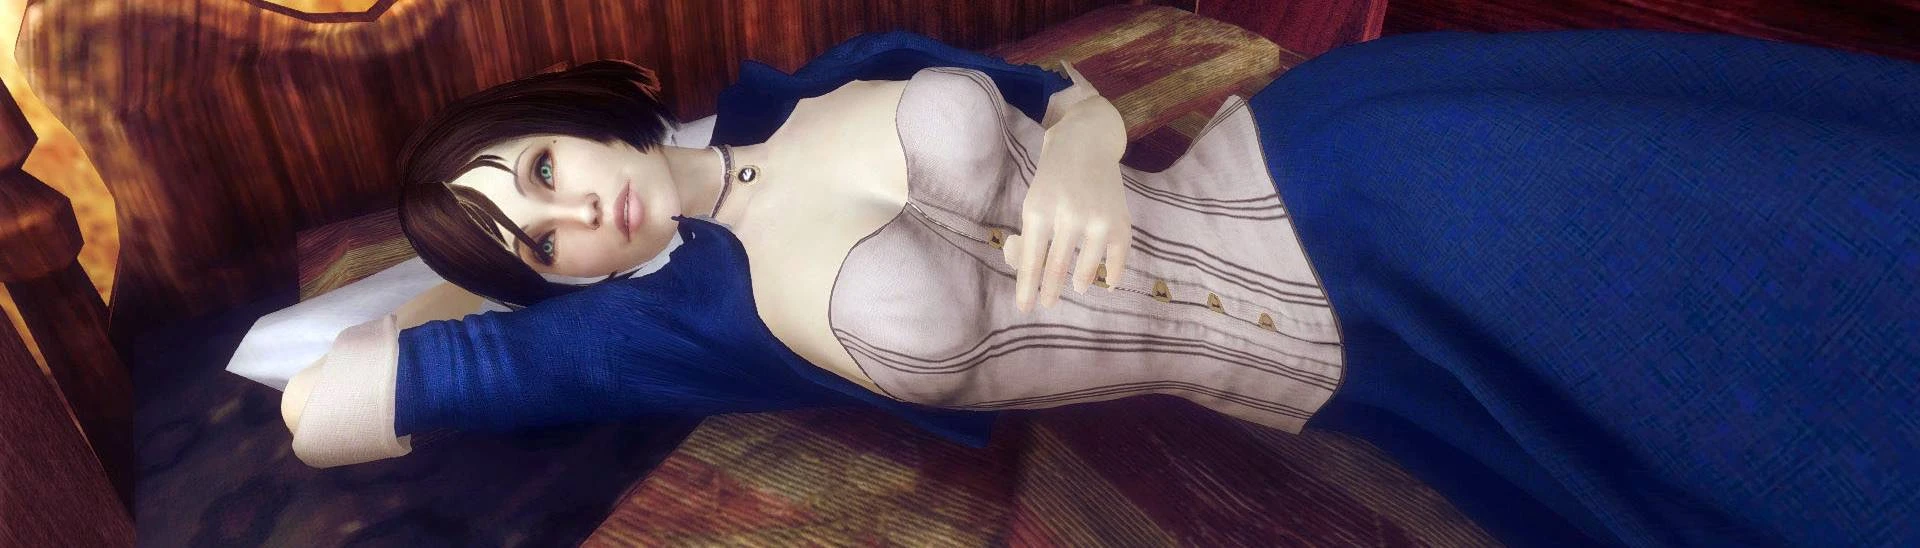 Bioshock Infinite's Elizabeth in Fallout: New Vegas Companion mod (link in  description) 